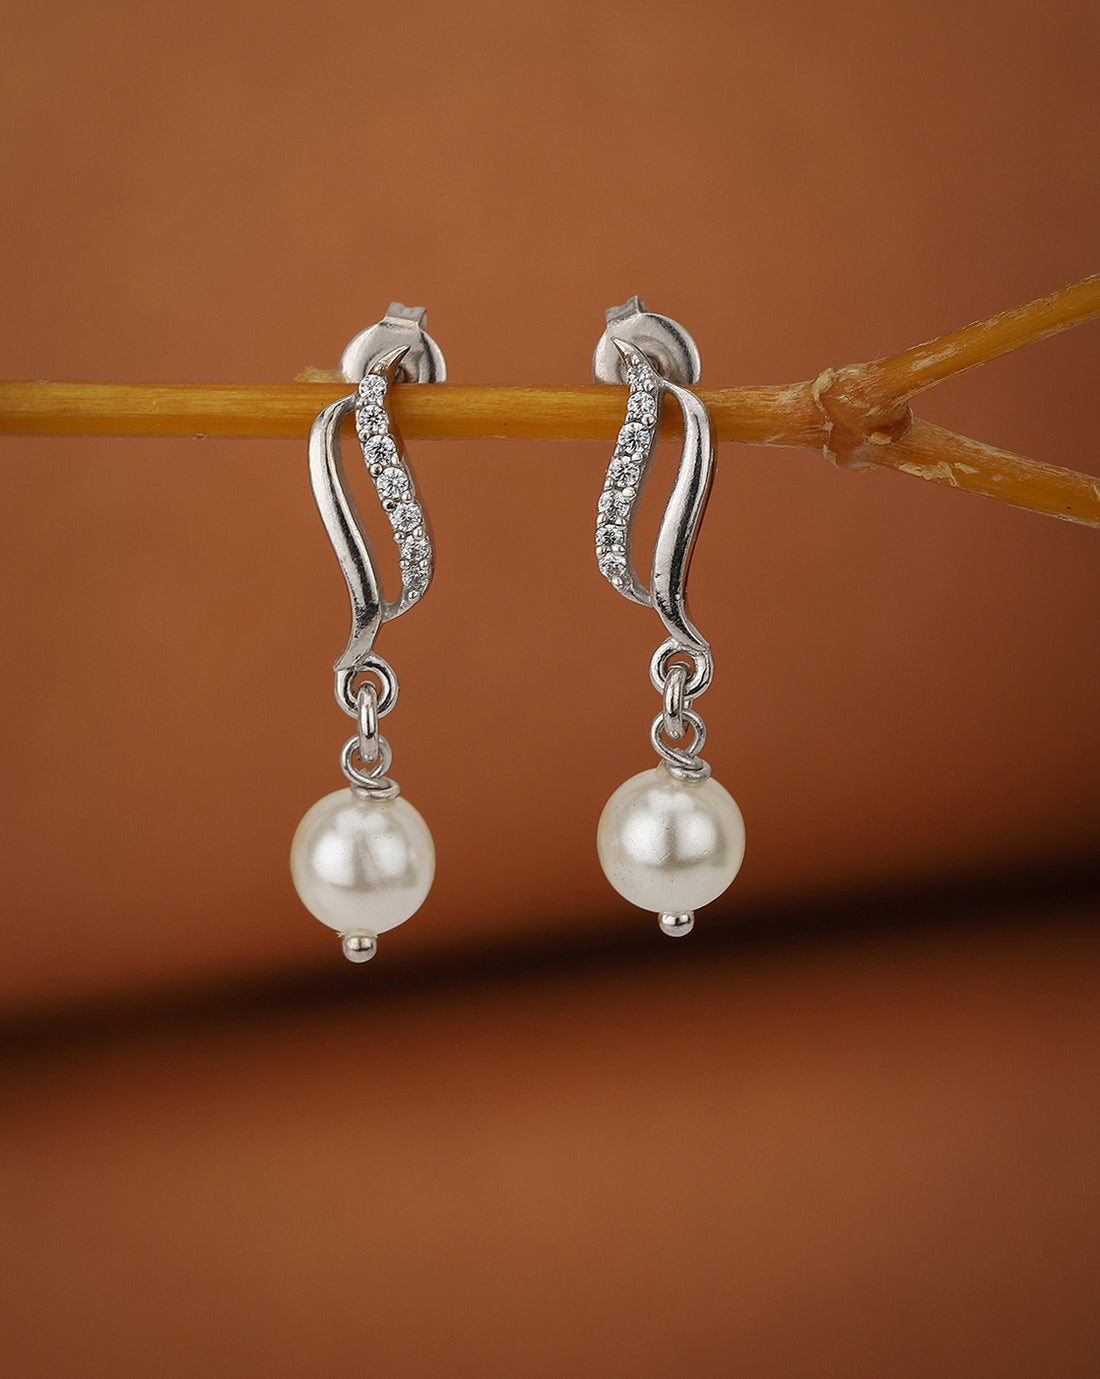 Carlton London Rhodium Plated Cz Drop Earring With Dangling Pearl For Women